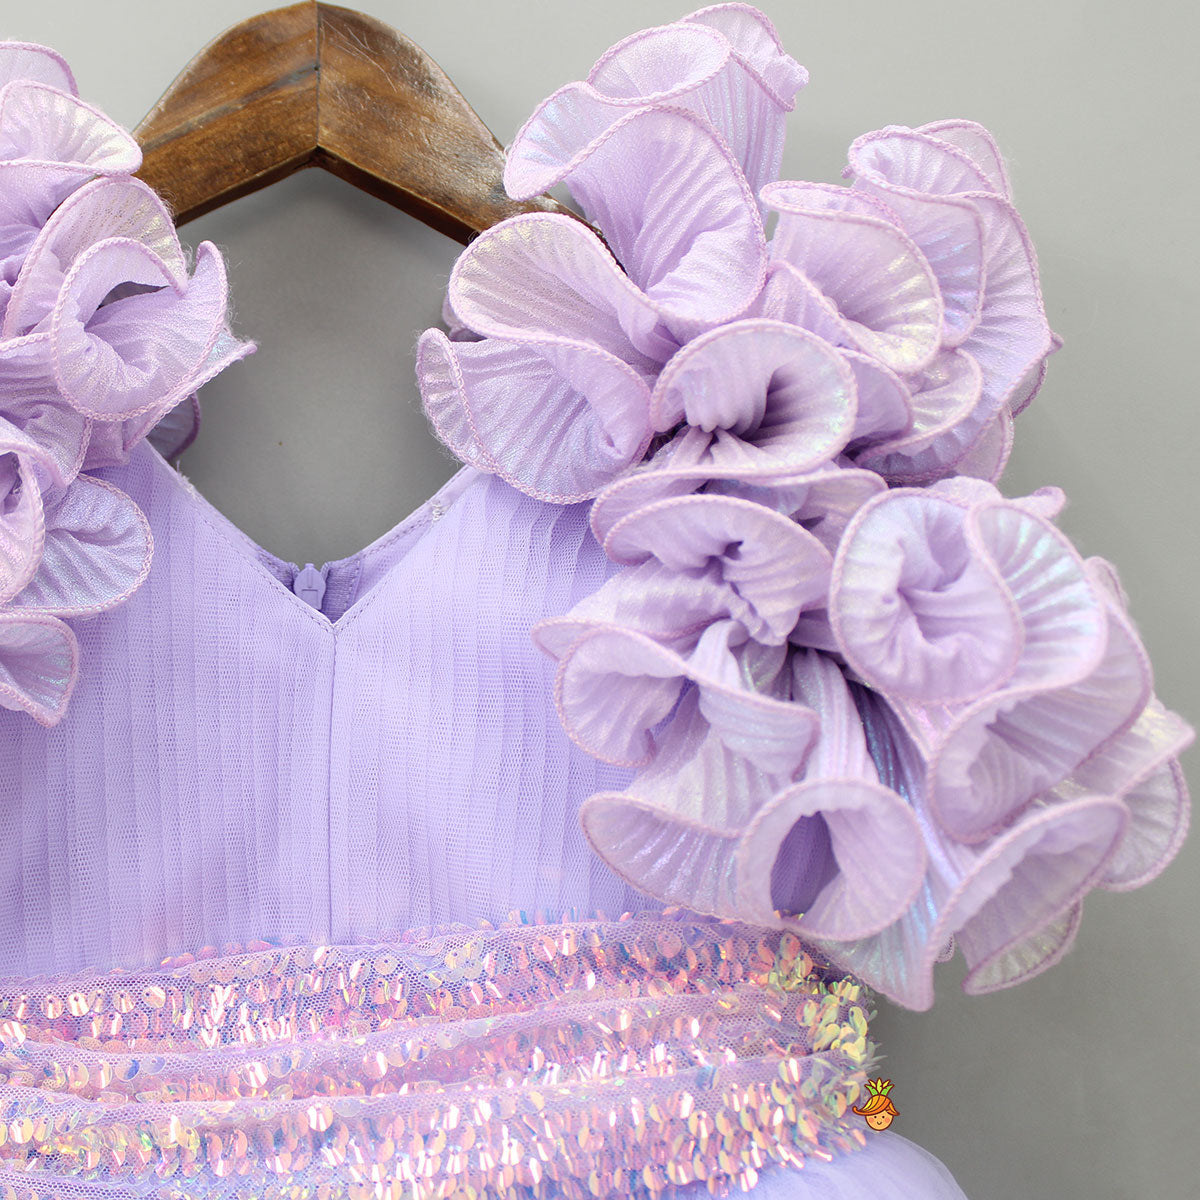 Pre Order: V Neck Ruffle Enhanced Lavender Fancy Gown